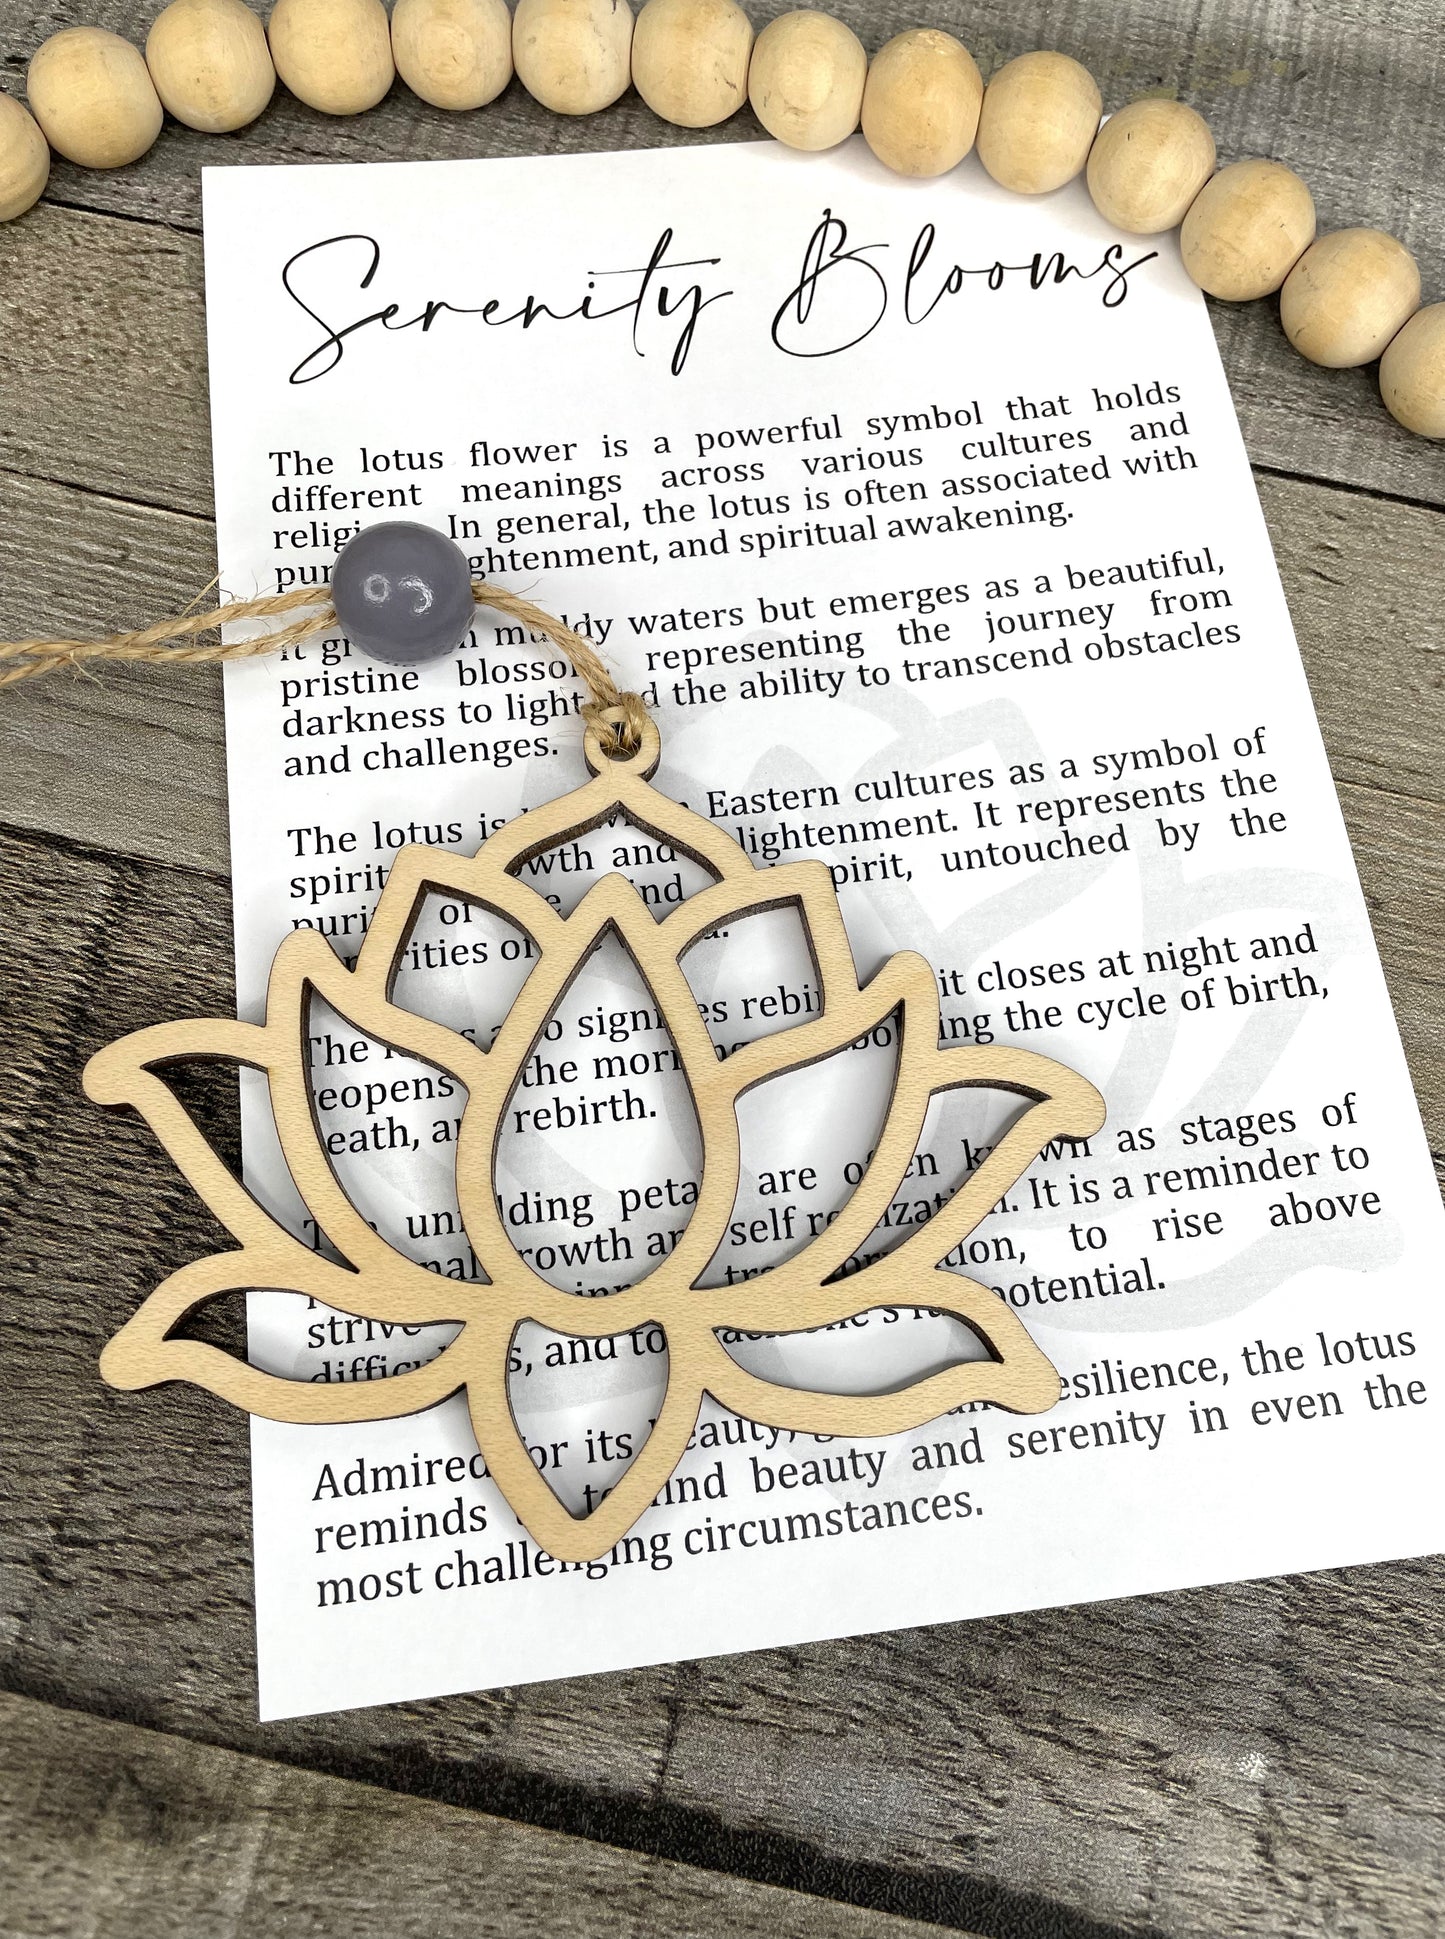 Lotus Story Ornament: Serenity Blooms